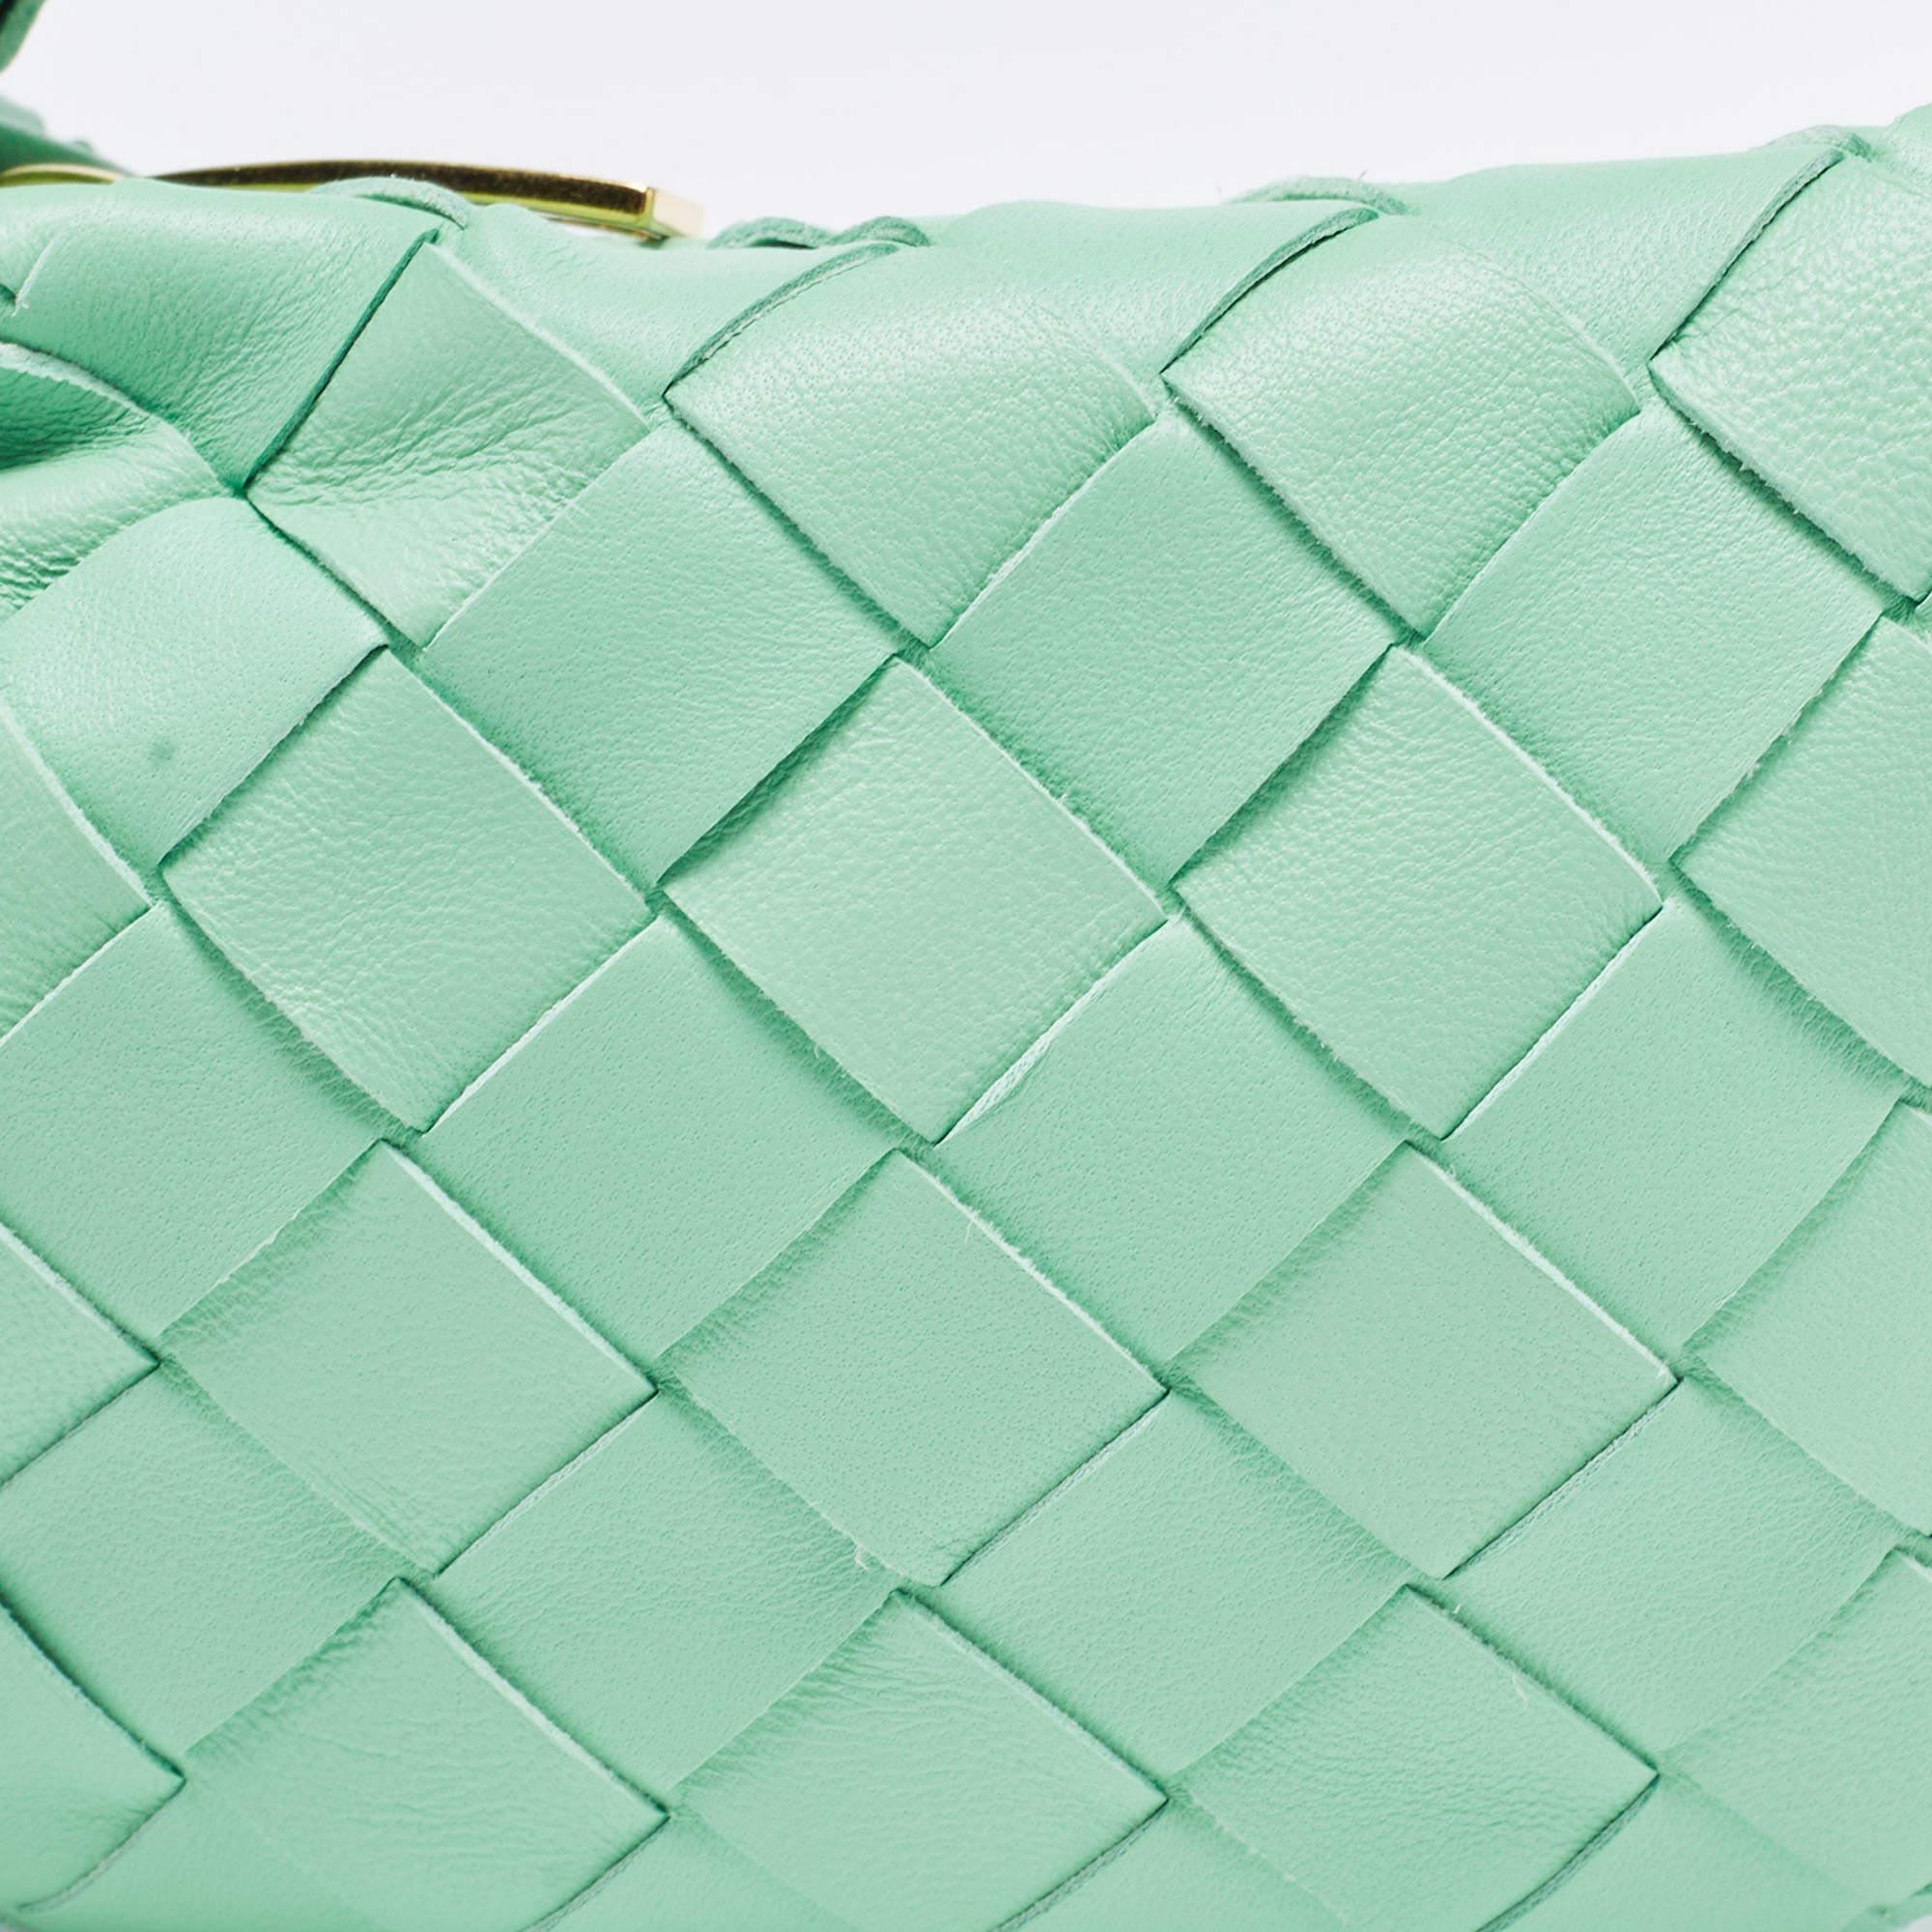 Bottega Veneta Mint Green Intrecciato Leather Candy Jodie Bag 2